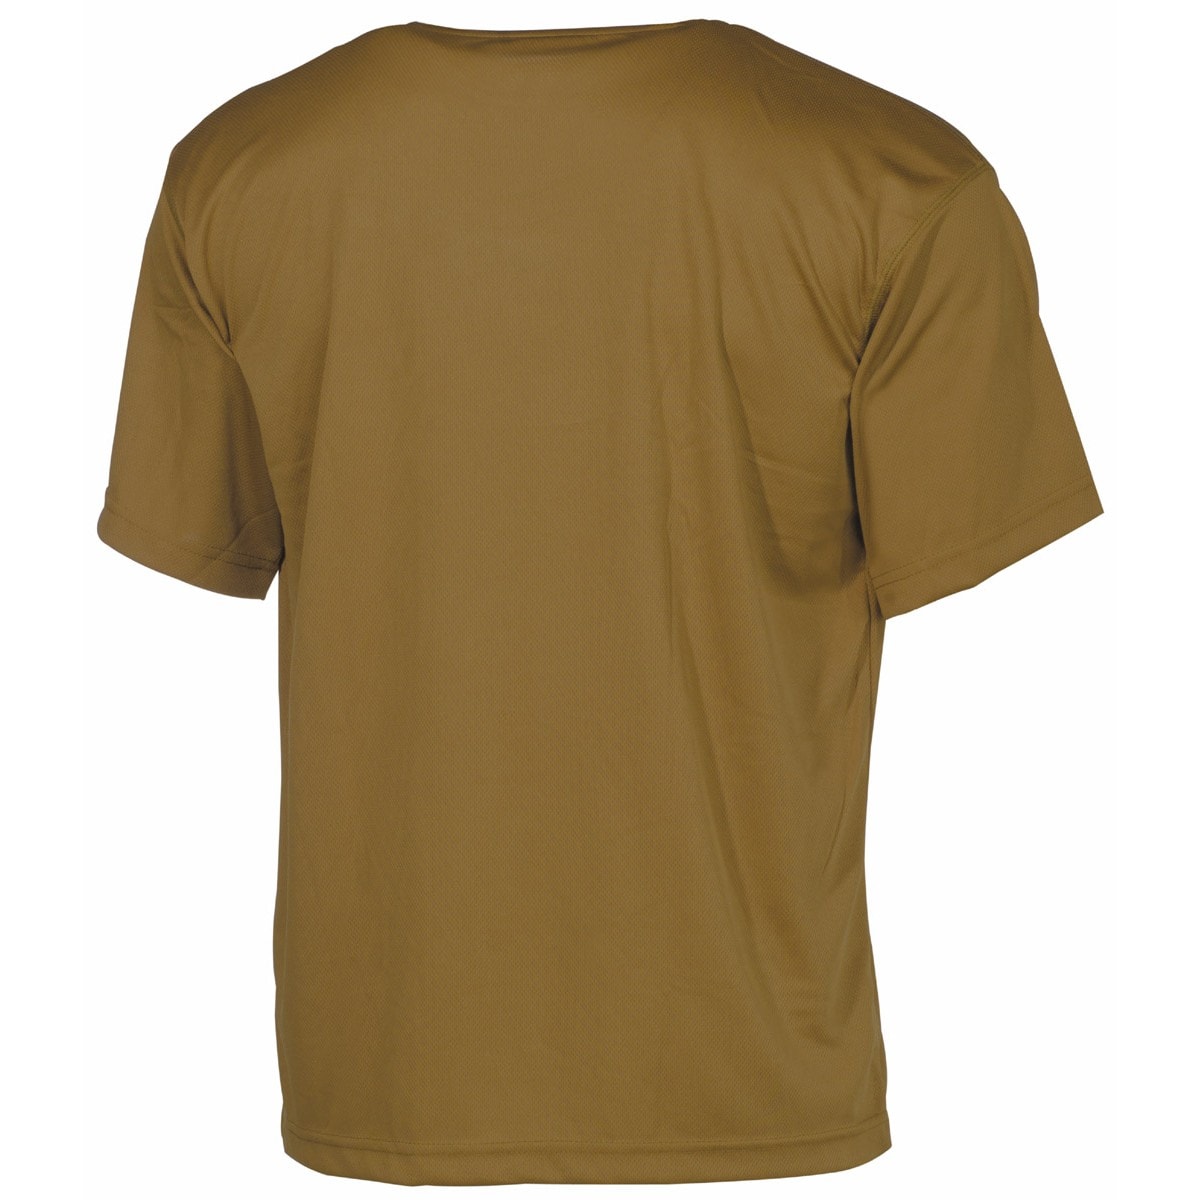 Koszulka T-shirt MFH Tactical - Coyote Tan